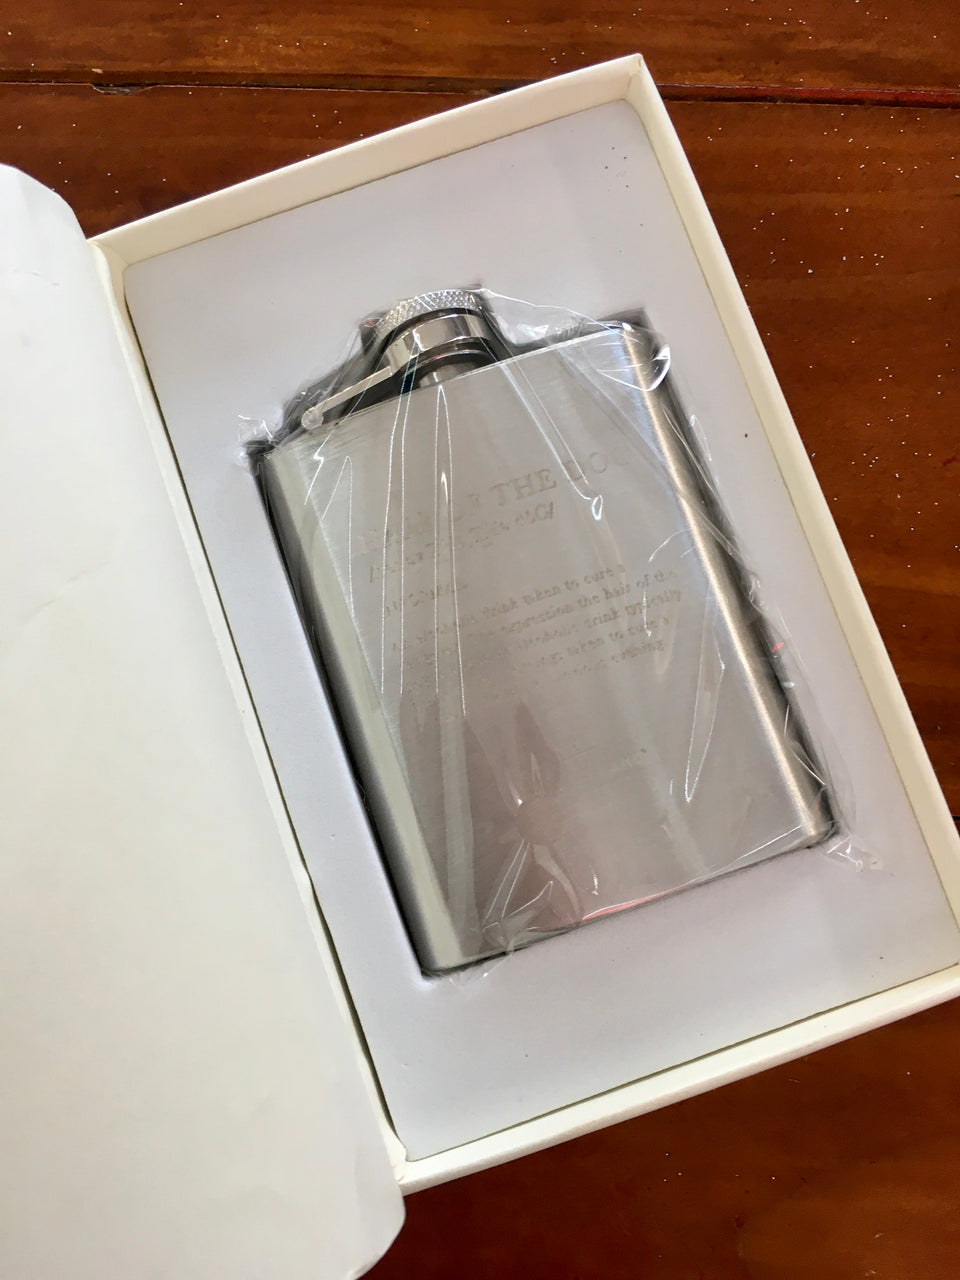 showing flask inside faux book